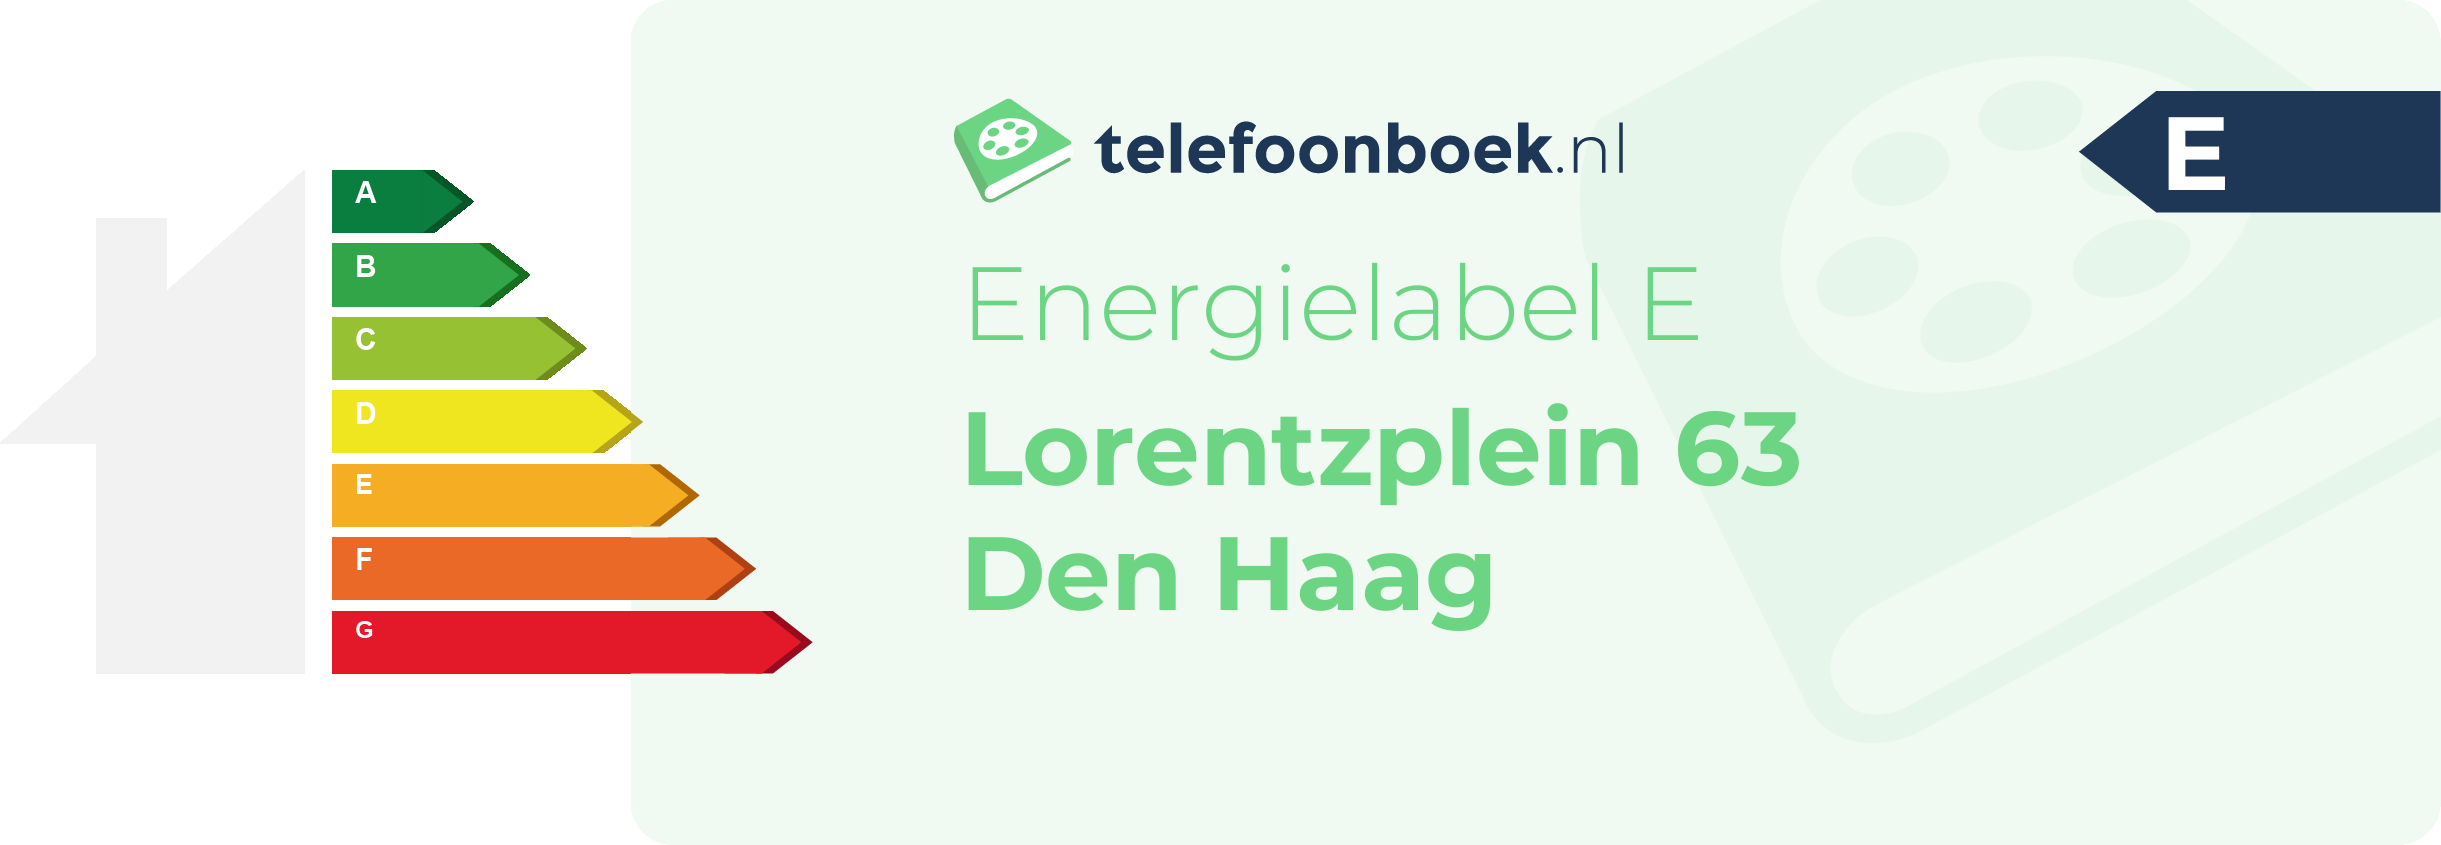 Energielabel Lorentzplein 63 Den Haag